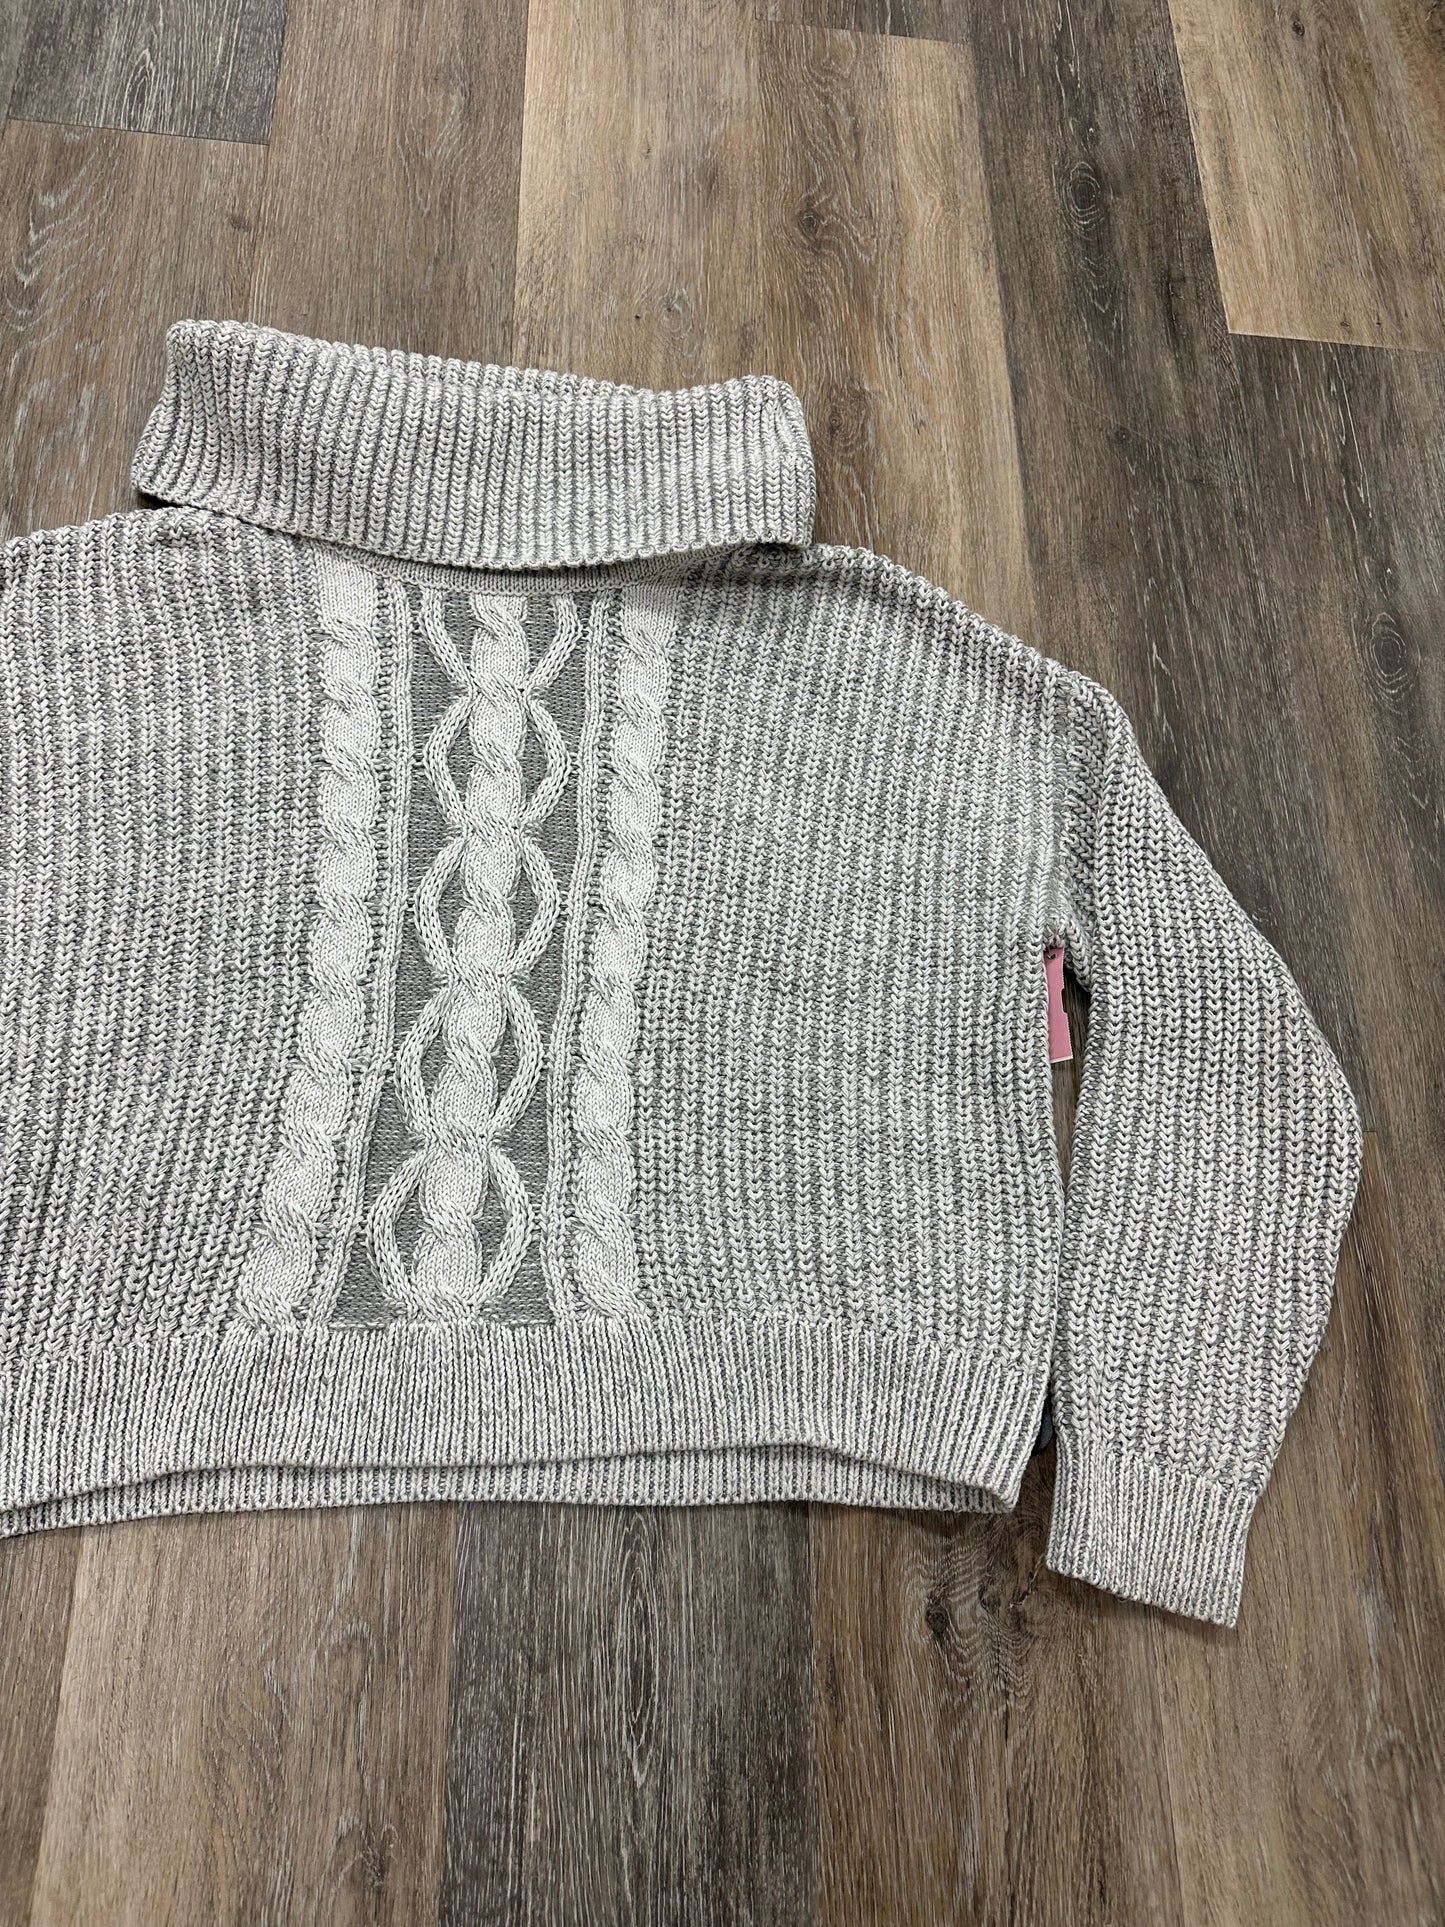 Sweater By Bobi  Size: S